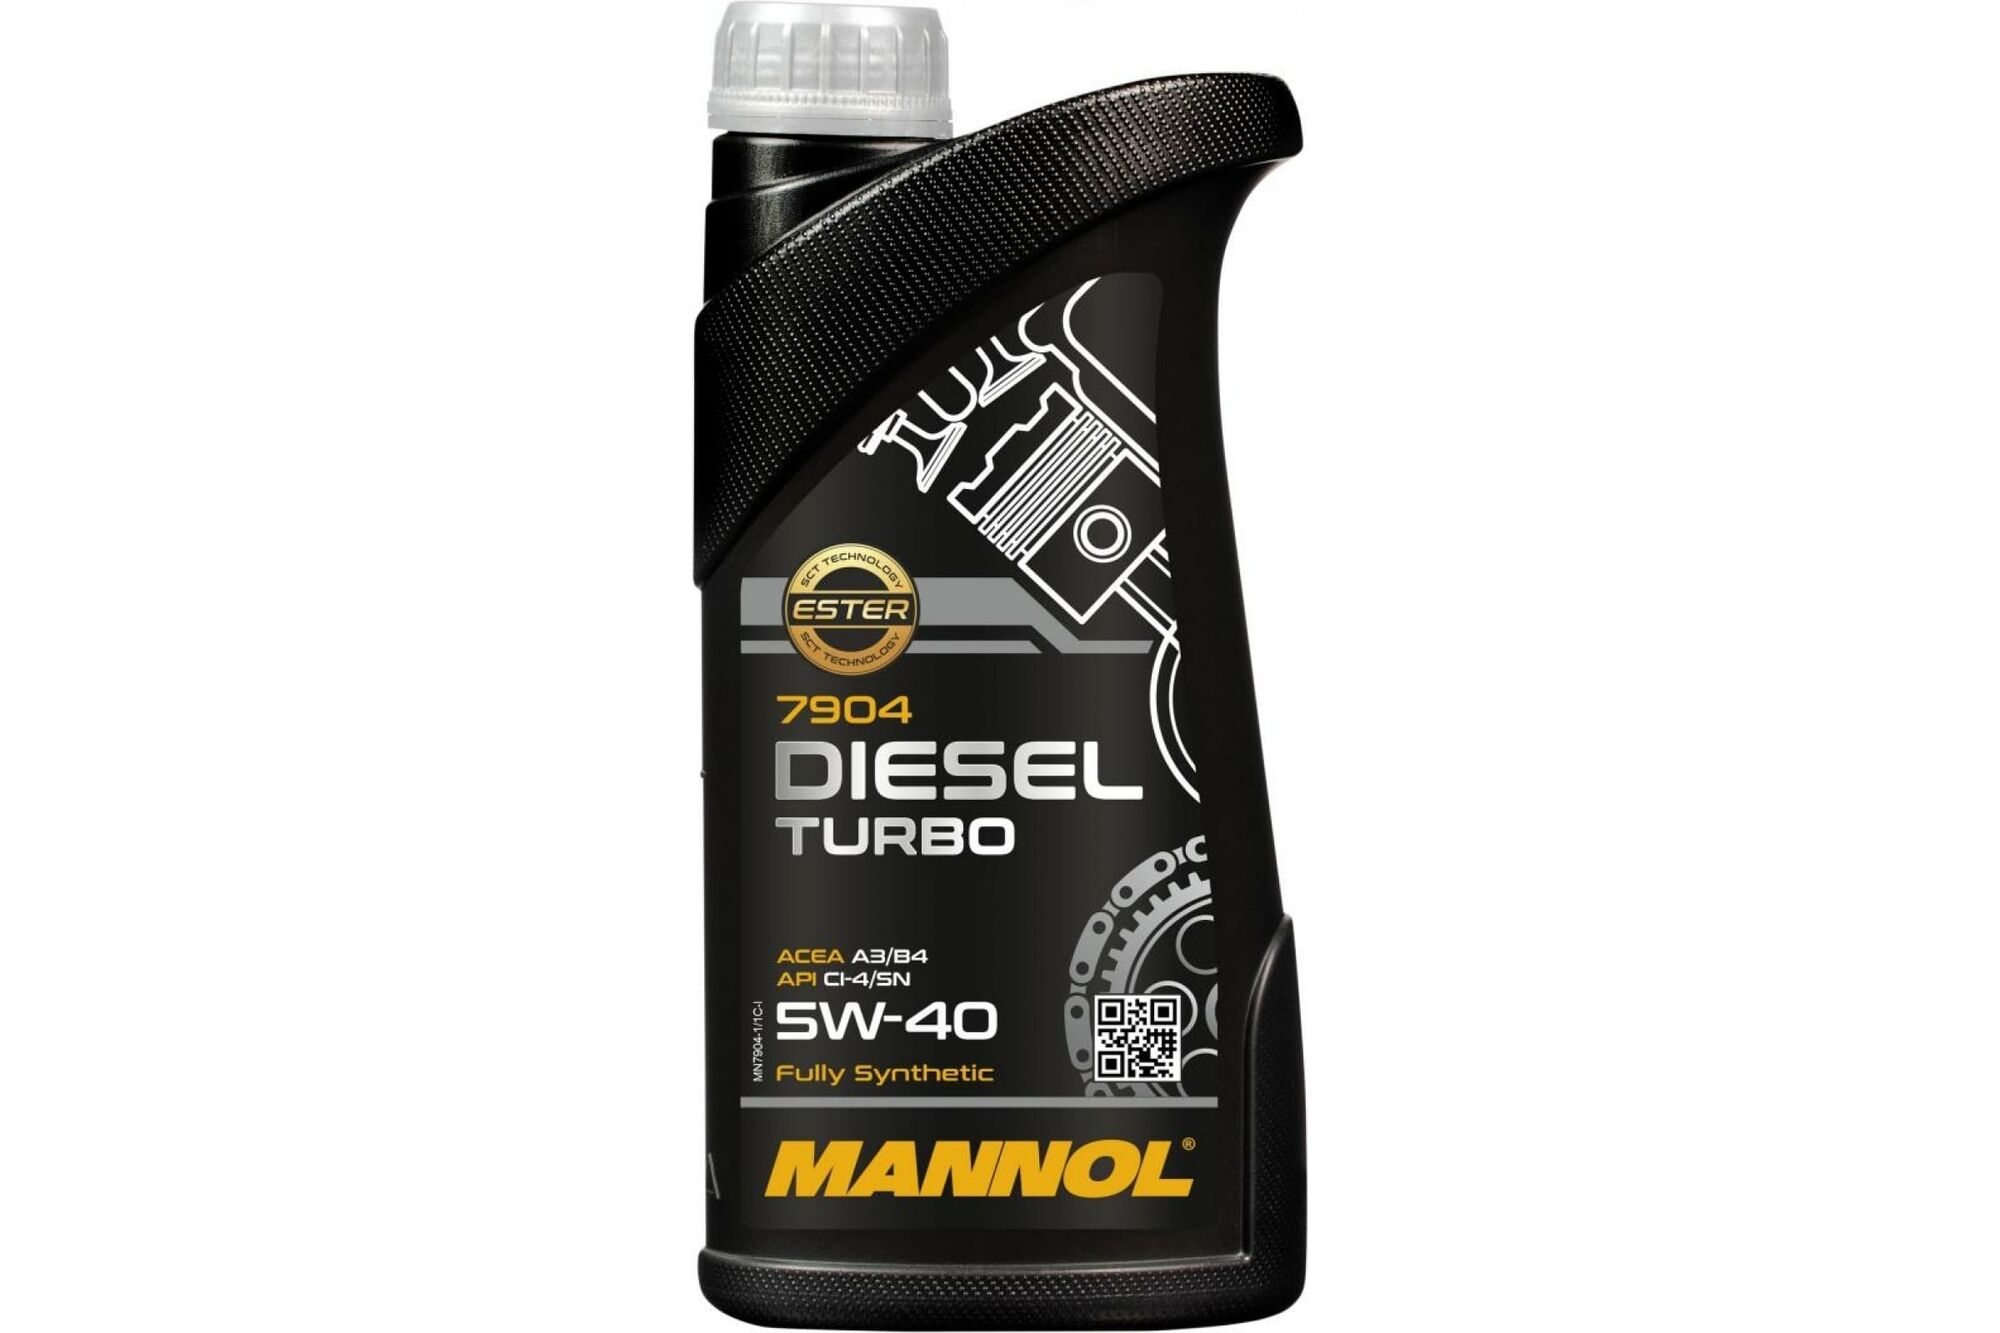 Синтетическое моторное масло MANNOL DIESEL TURBO 5W40, 1 л 1010 Mannol